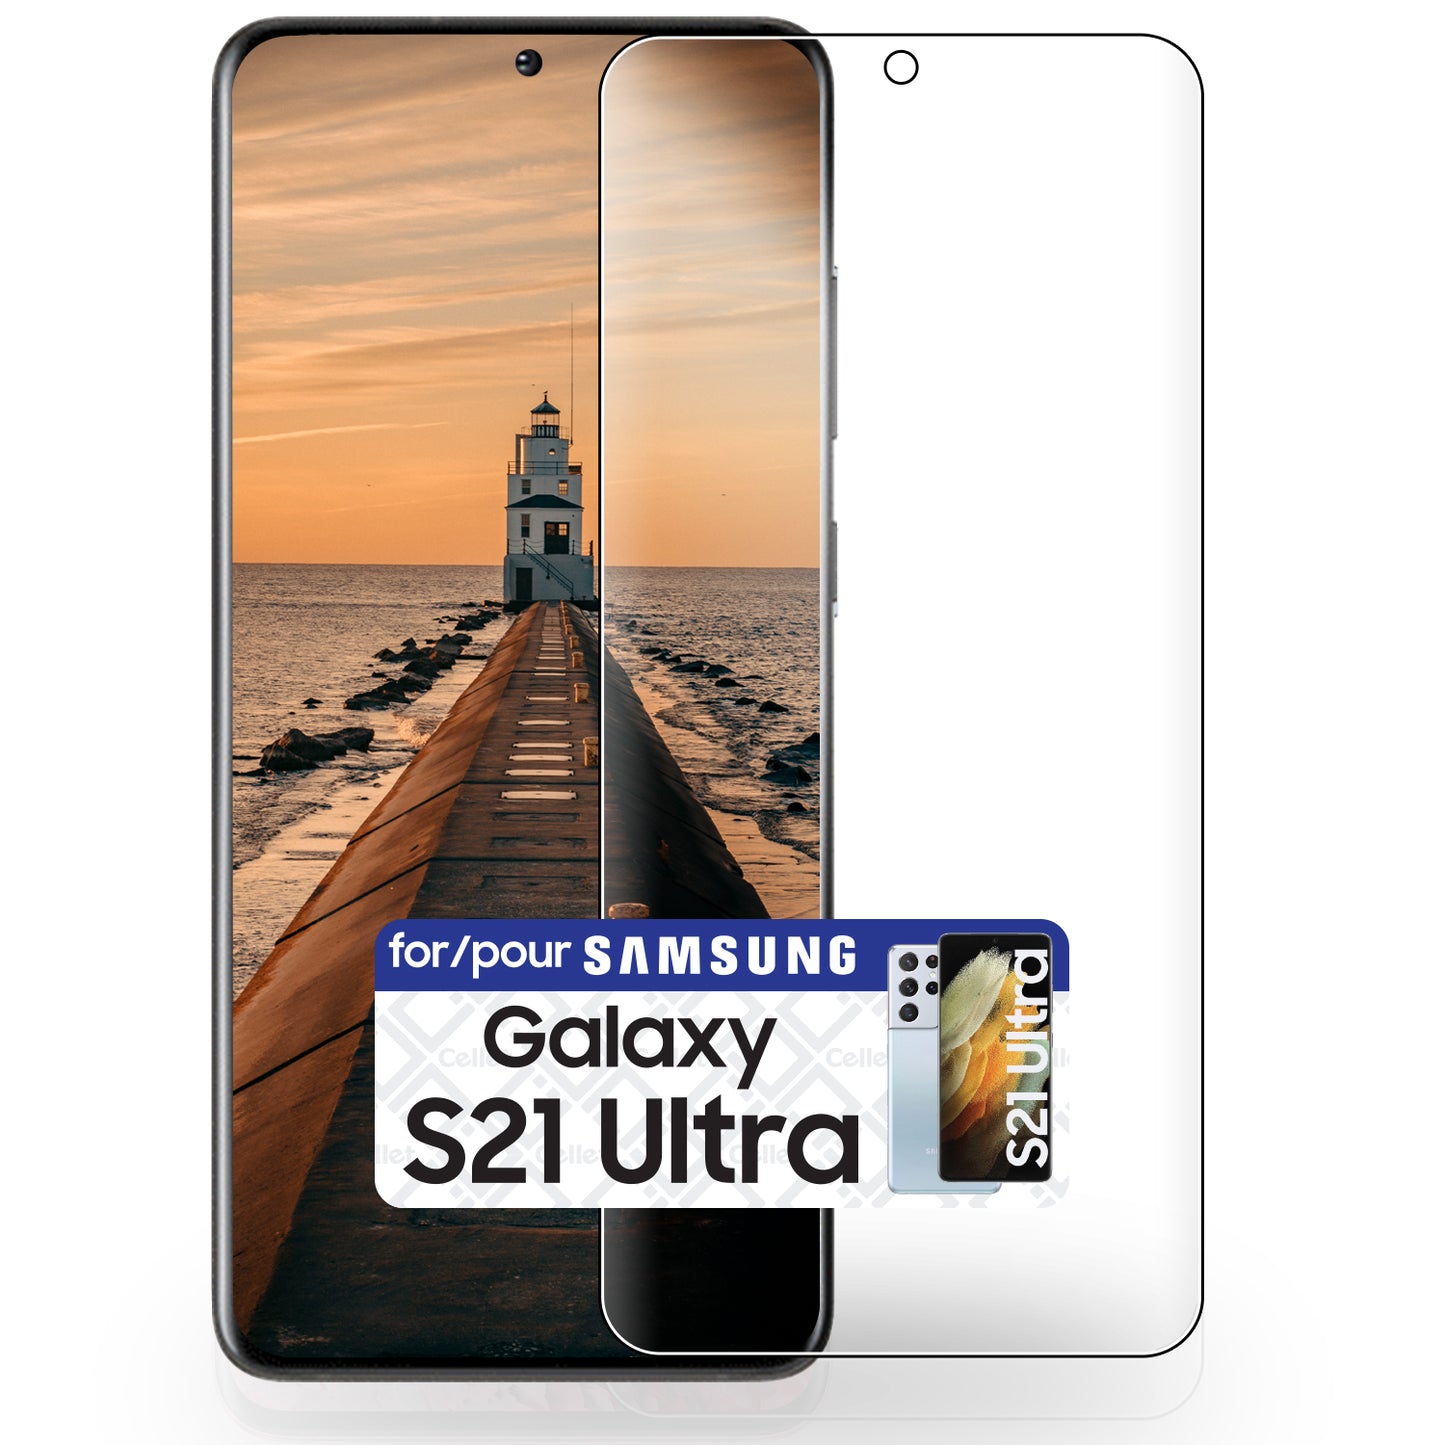 STSAMS21U - Cellet Samsung Galaxy S21 Ultra TPU Screen Protector, Full Coverage Flexible Film Screen Protector Compatible to Samsung Galaxy S21 Ultra